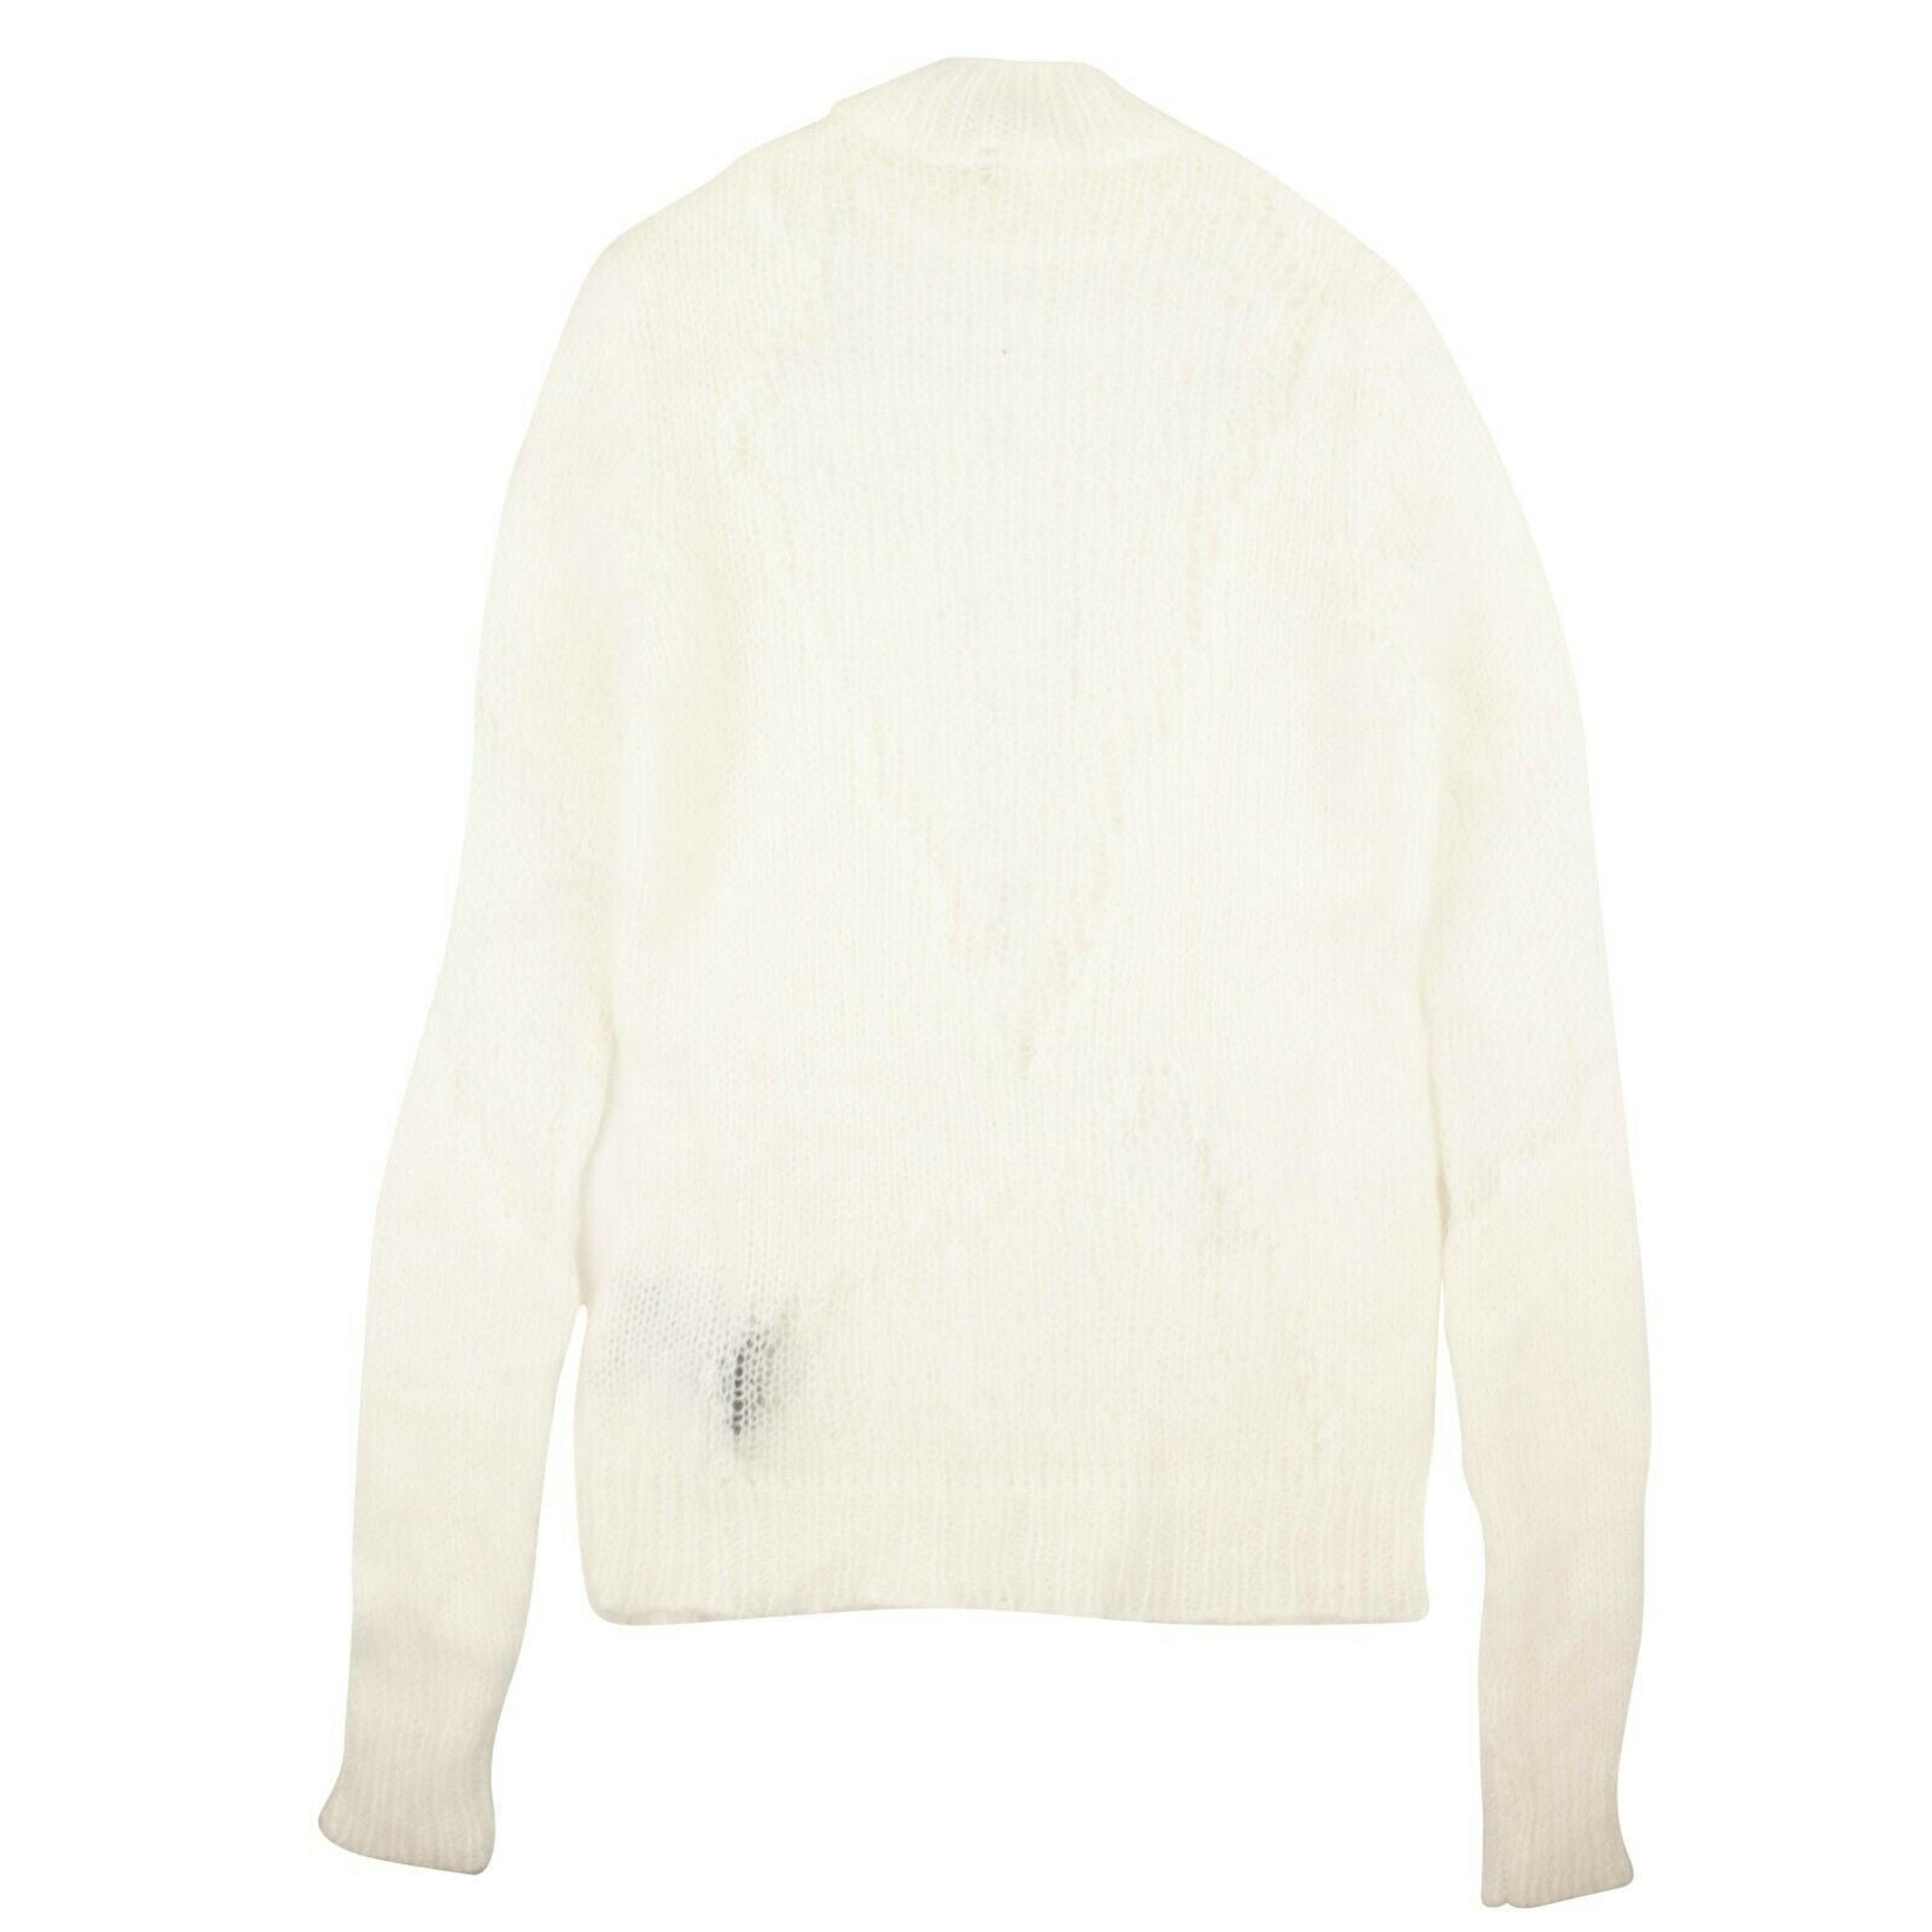 Alternate View 1 of White Alpaca Slim-Fit Sweater